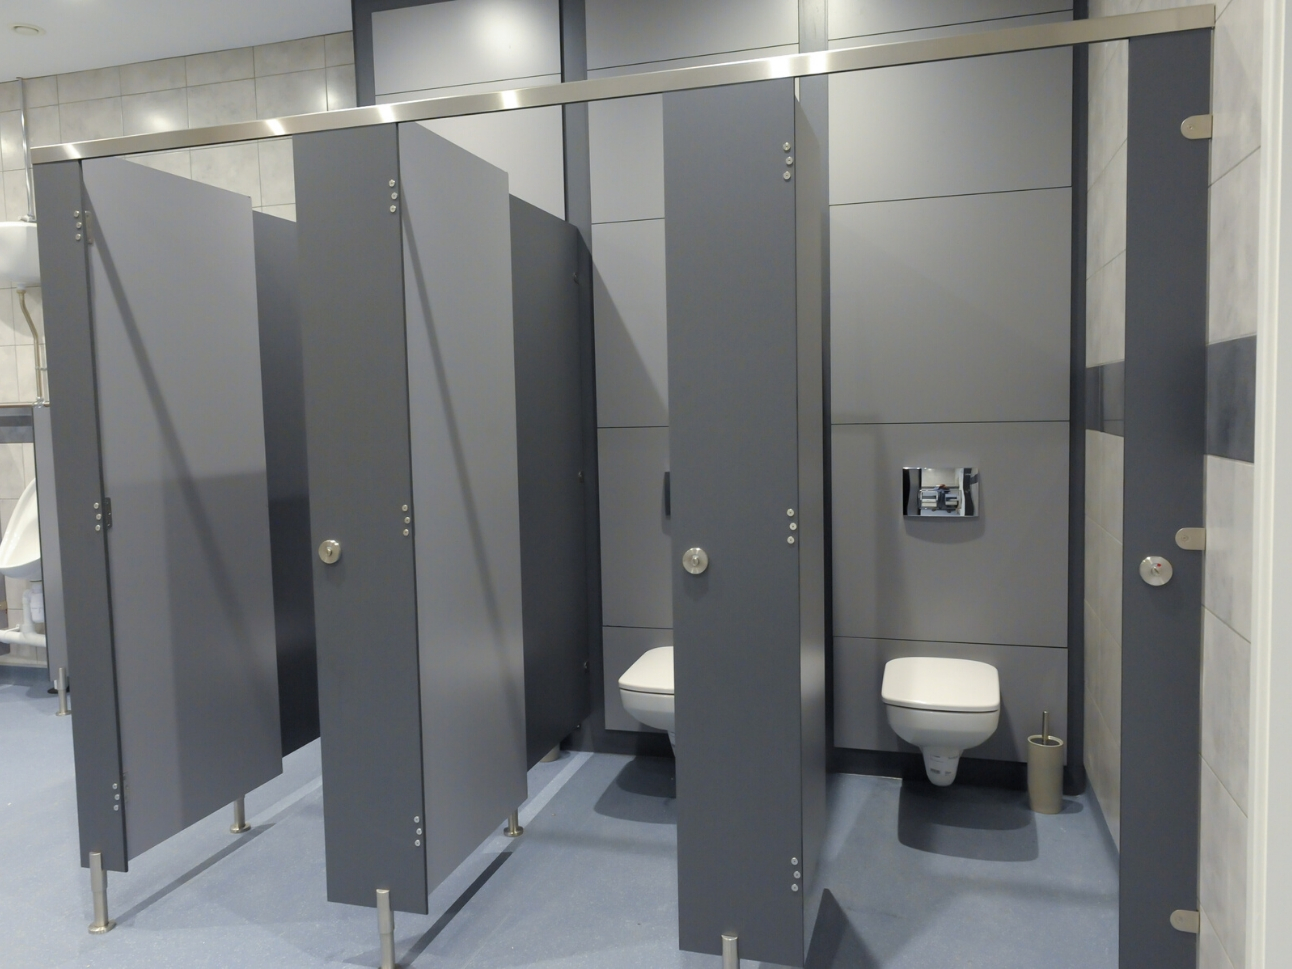 Wexham Park Golf Centre Washroom Refurbishment | Case Study | Commercial Washrooms